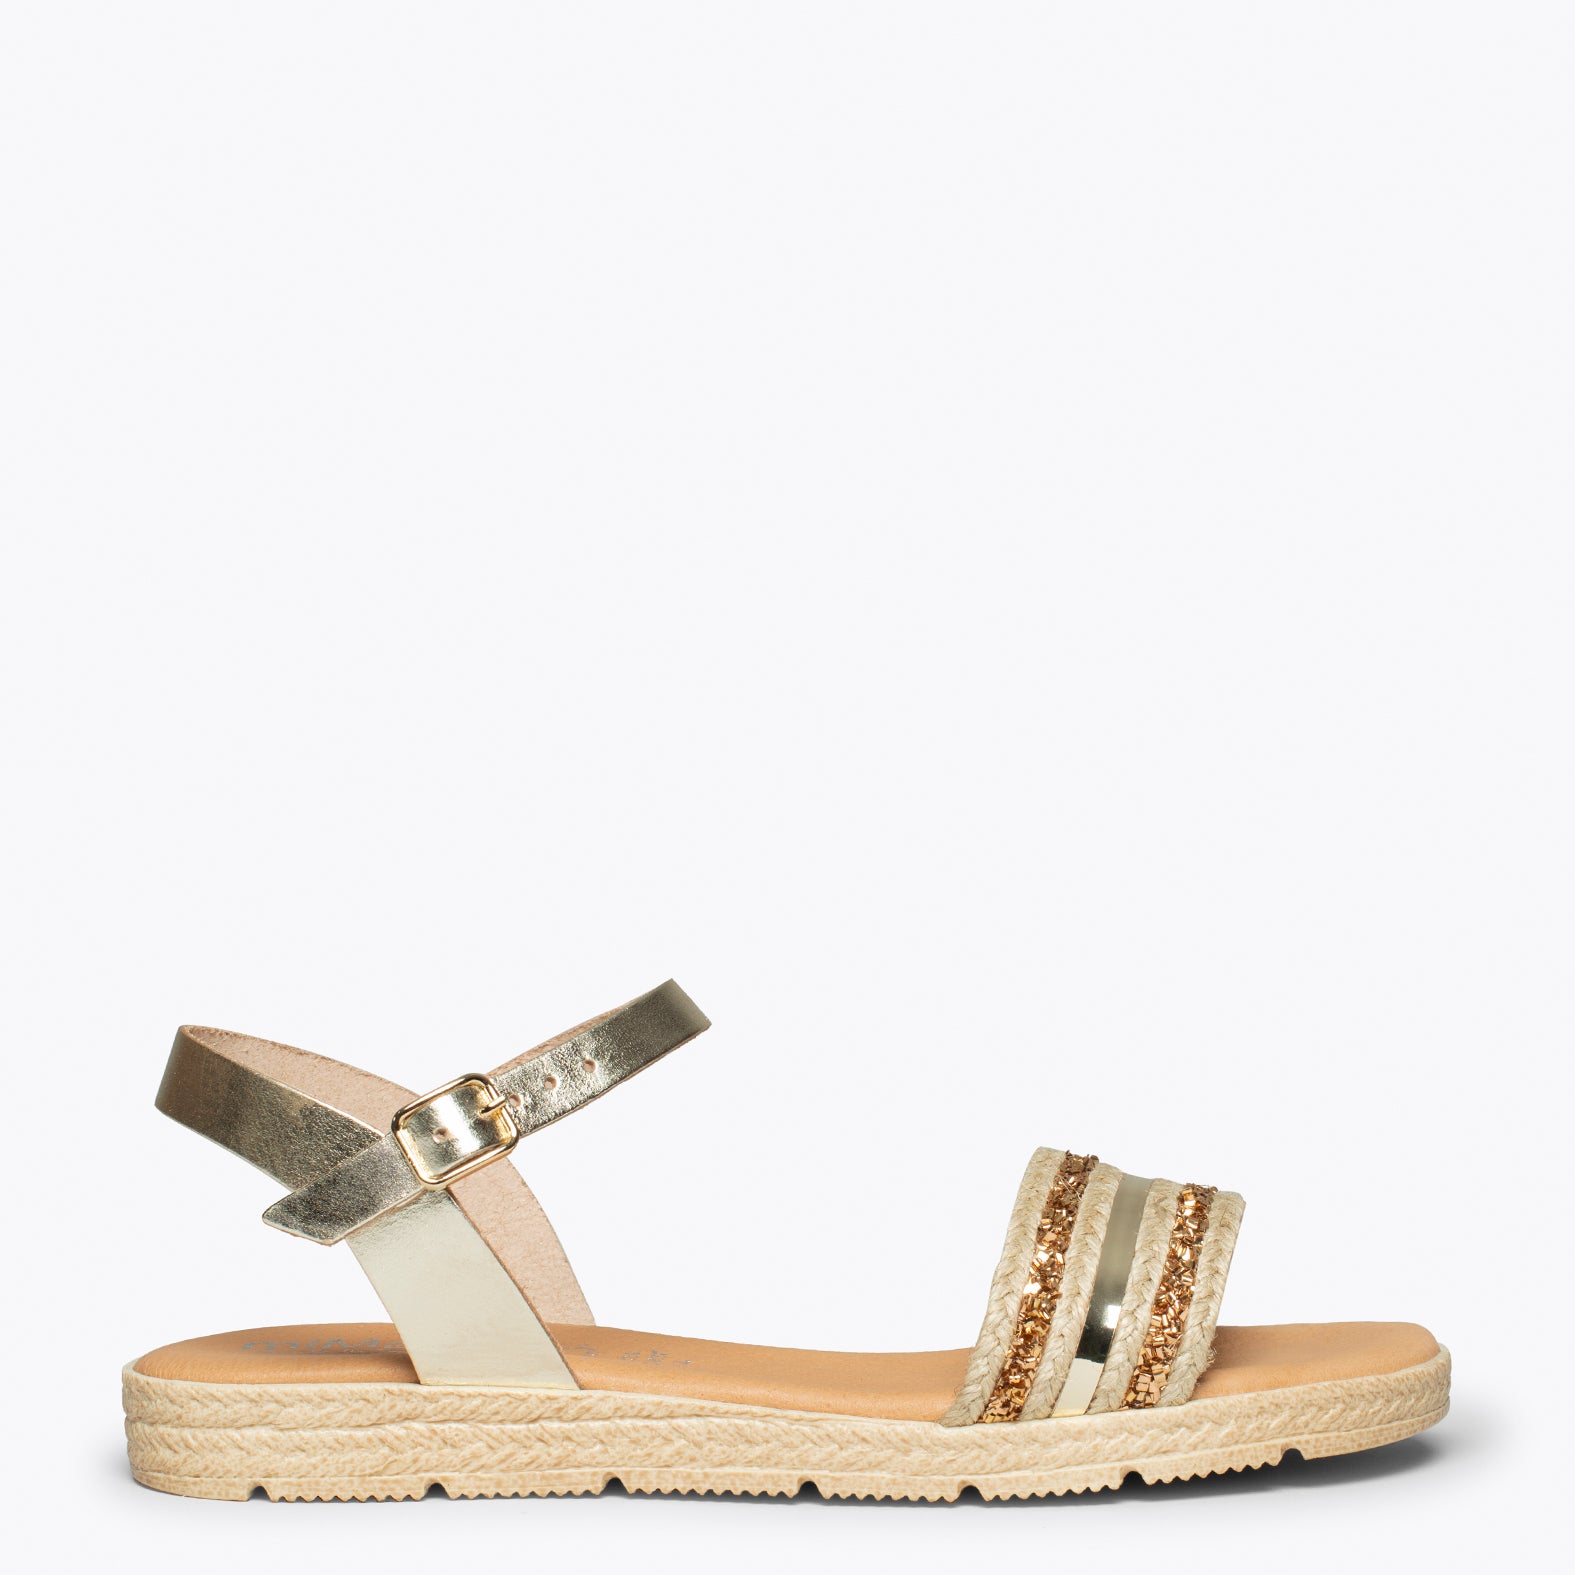 STAR – GOLD Animal print sandal with strap